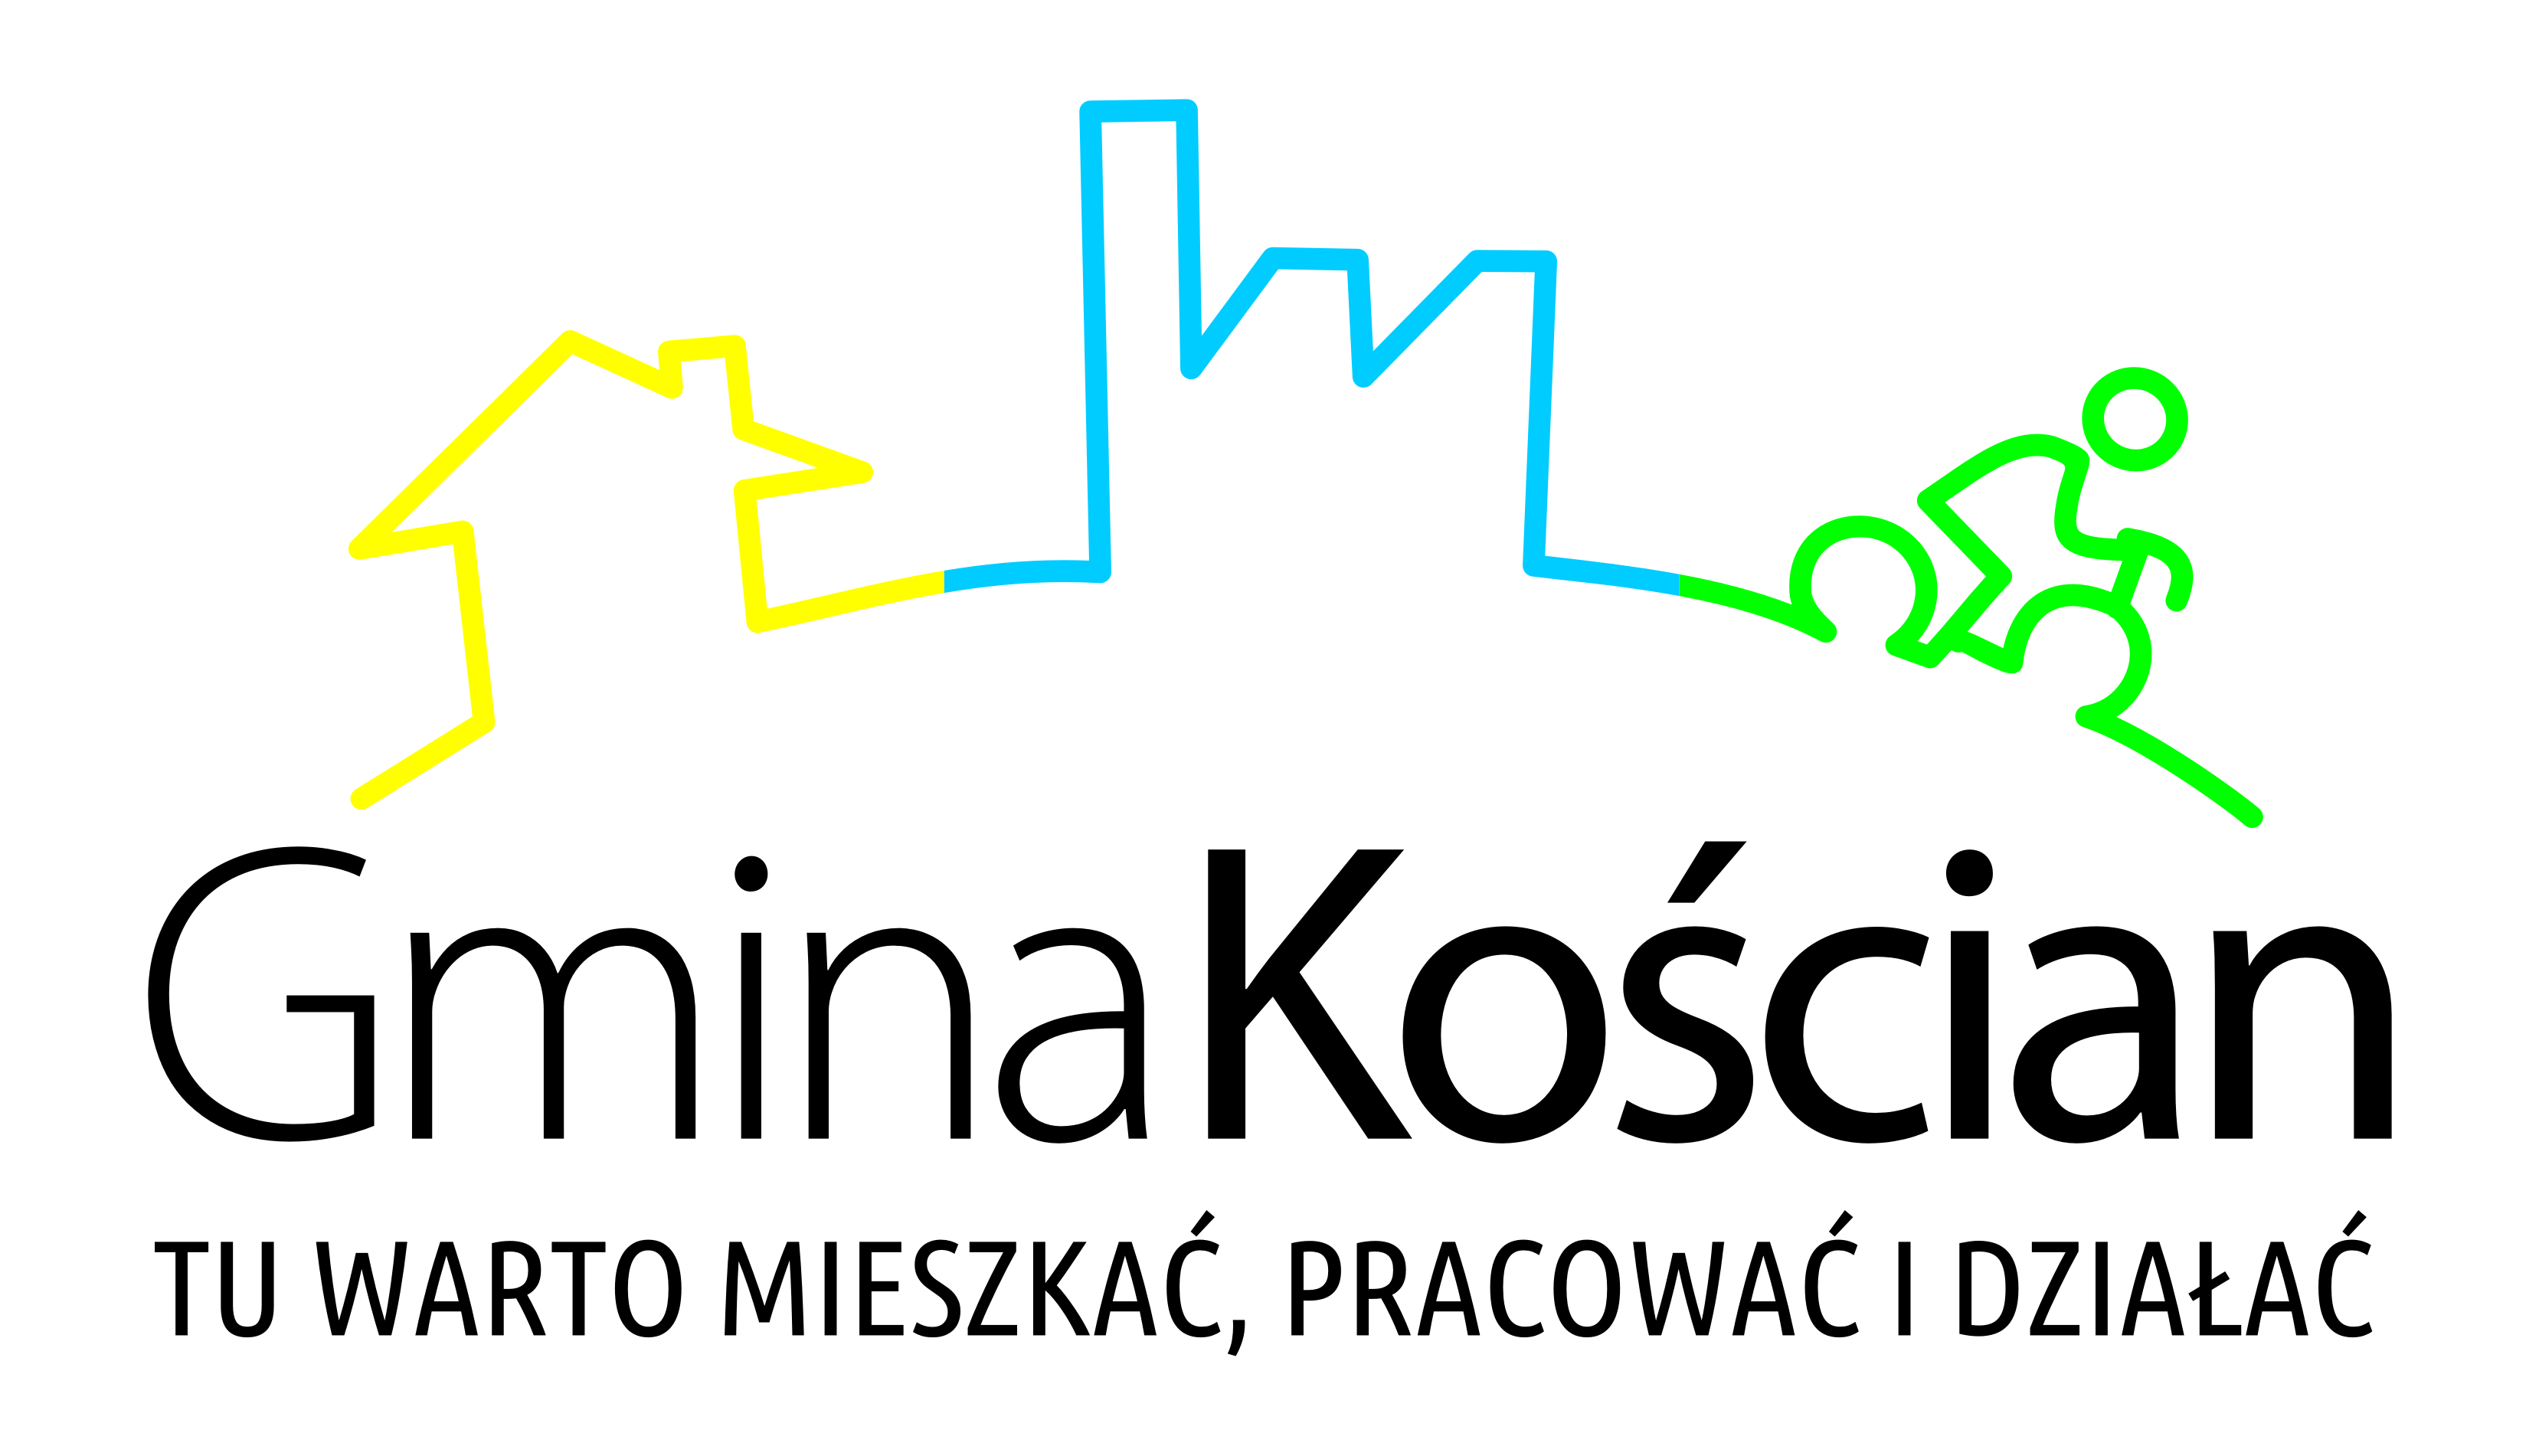 Logo kolor